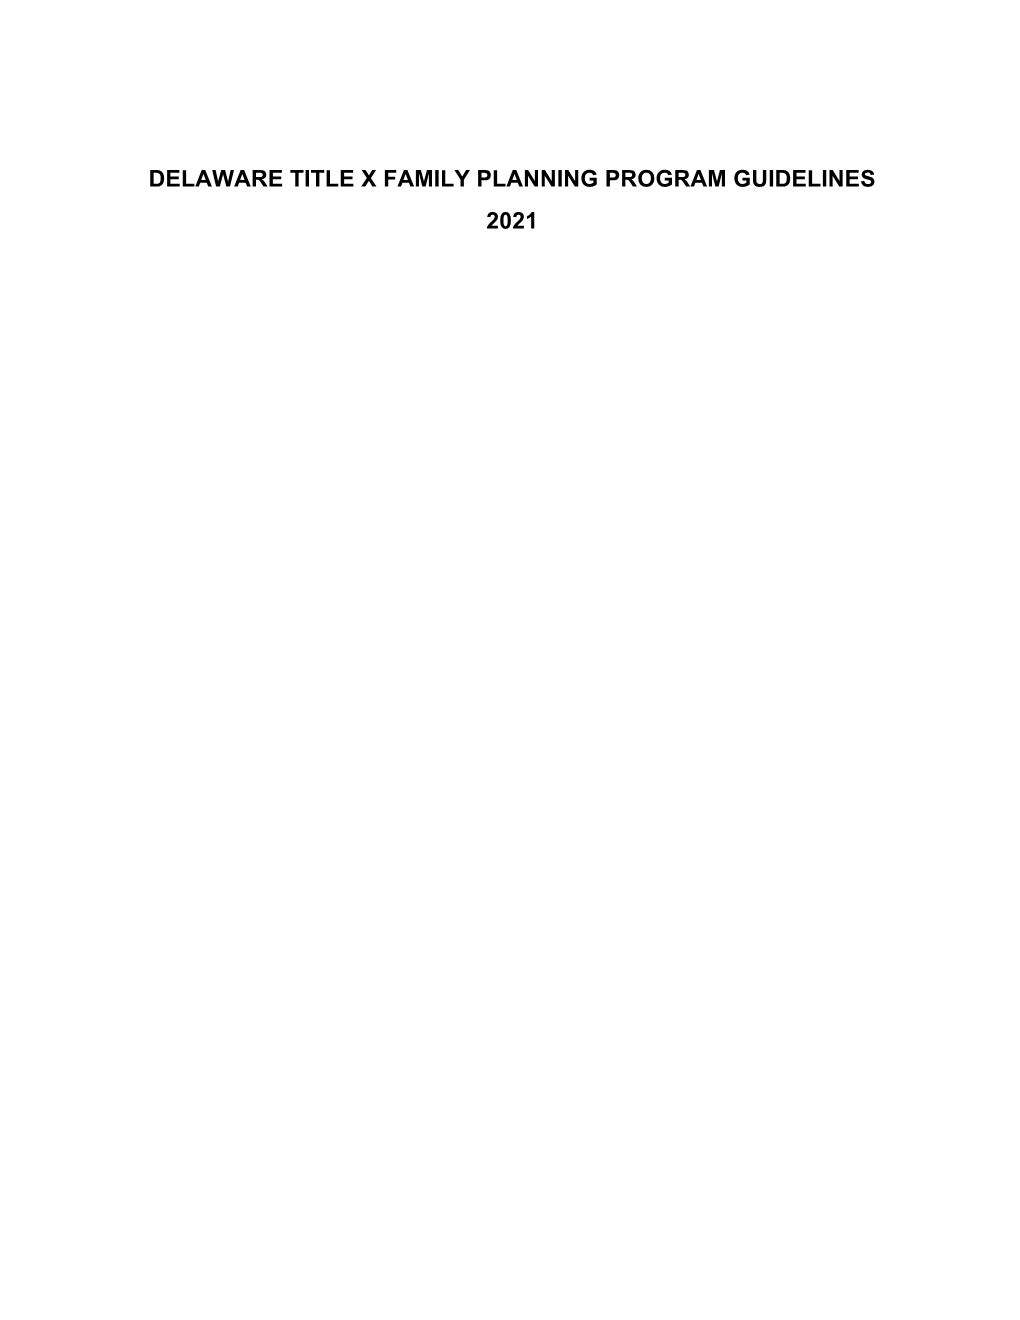 Delaware Title X Family Planning Program Guidelines 2021